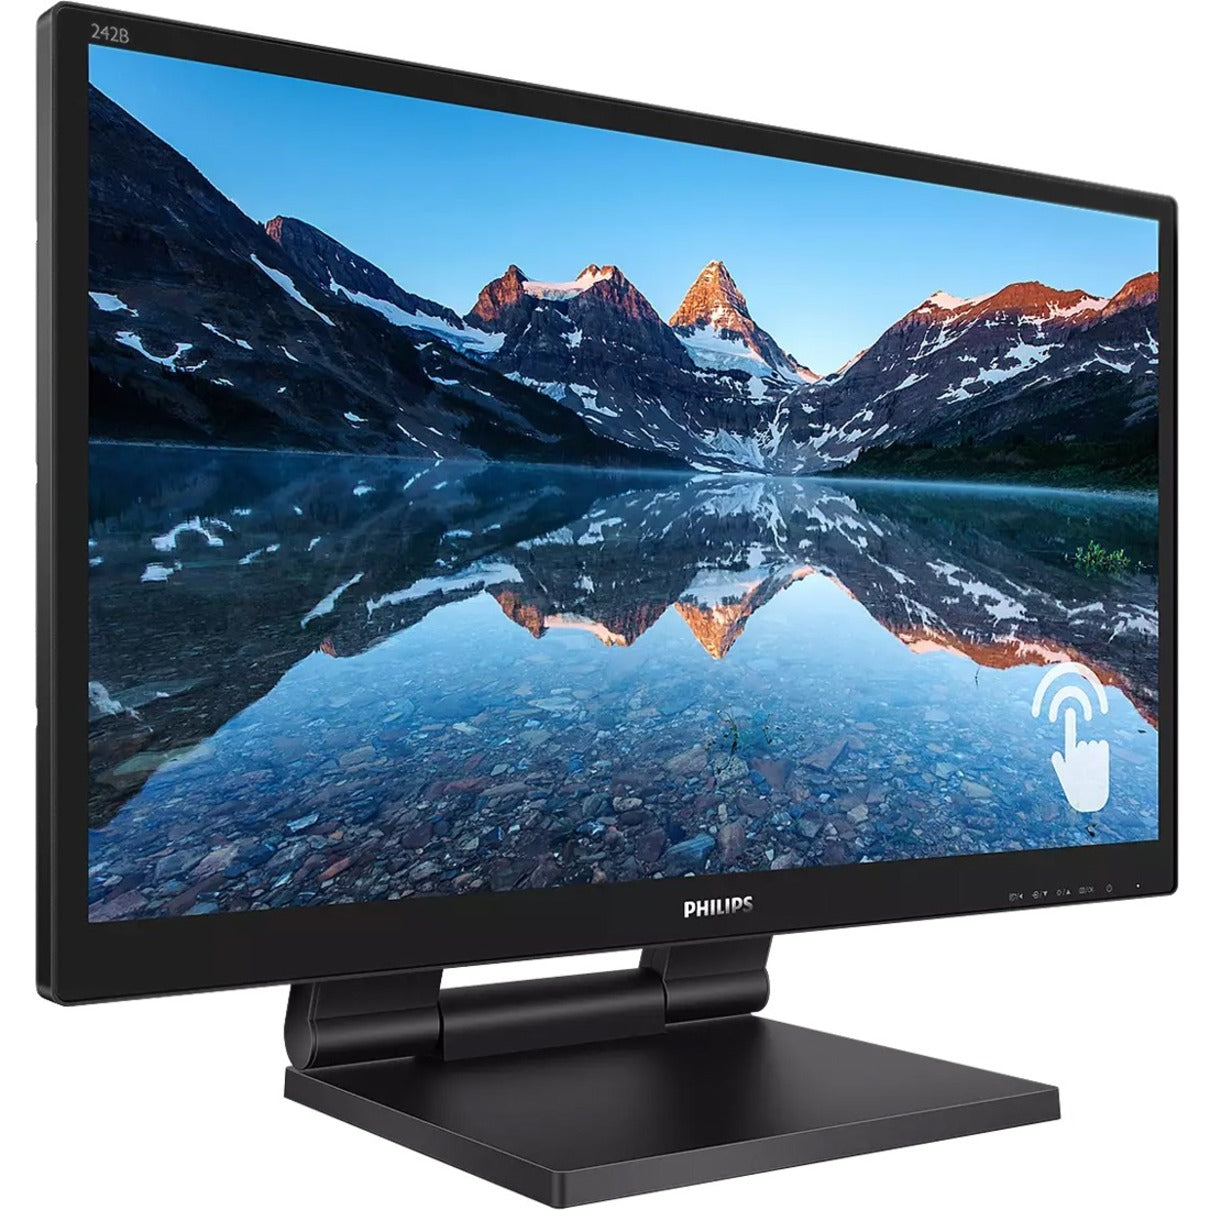 Philips 242B9T 23.8" LCD Touchscreen Monitor - Full HD, Ergonomic Design, USB Hub [Discontinued]